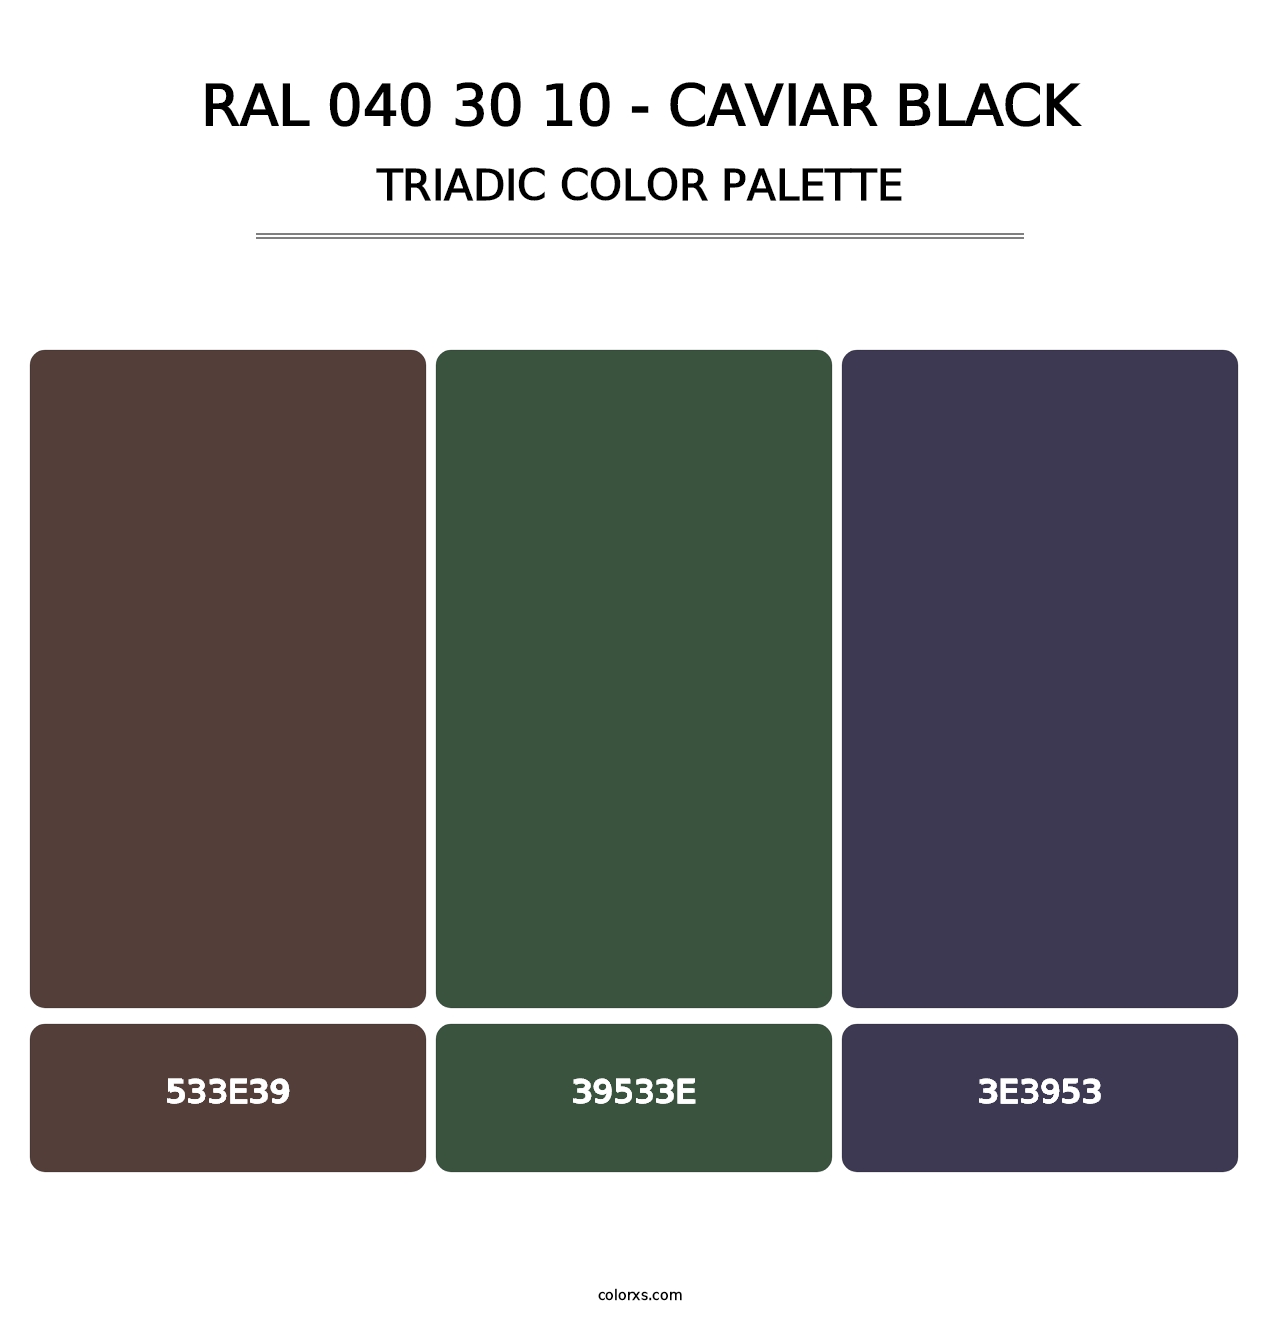 RAL 040 30 10 - Caviar Black - Triadic Color Palette